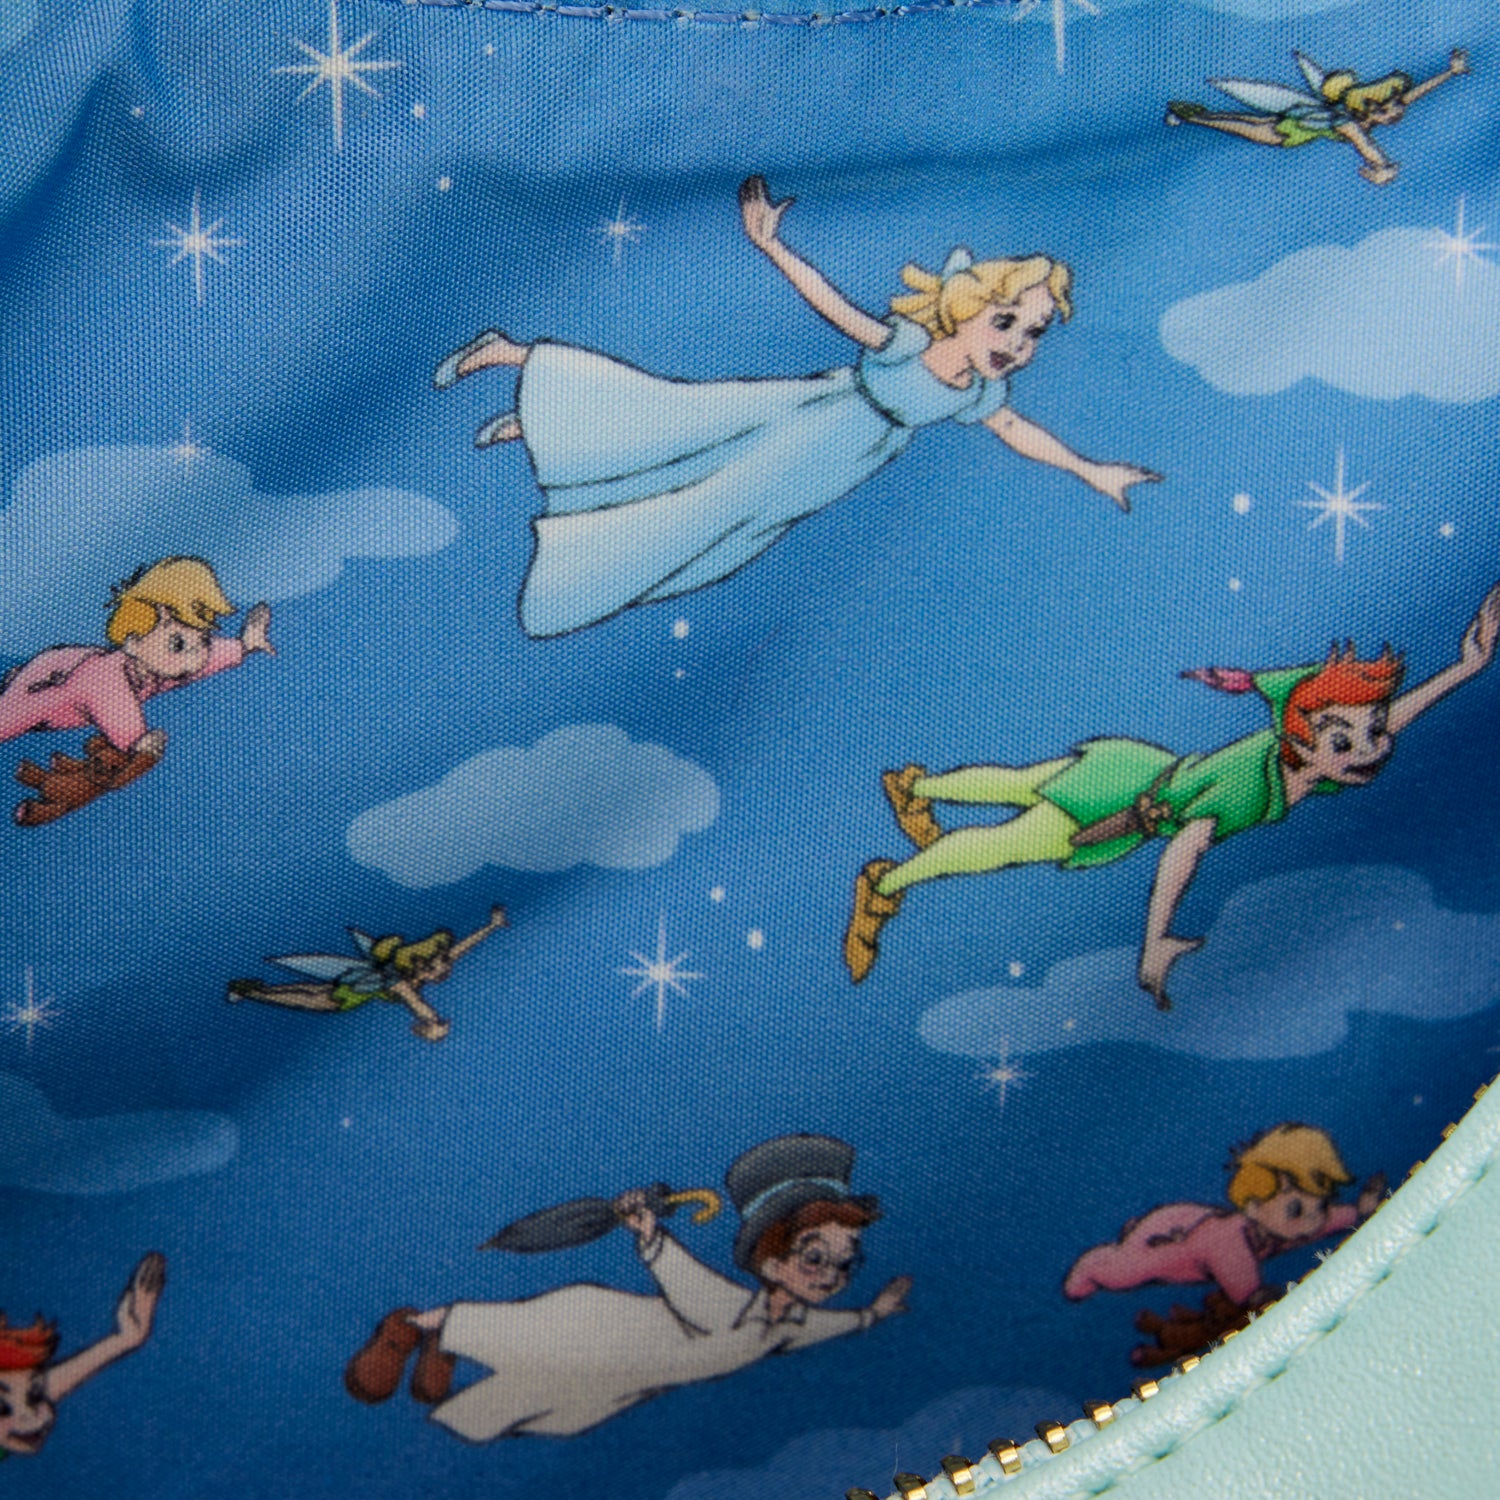 Loungefly x Disney Peter Pan Tinkerbell Wings Cosplay Crossbody Bag